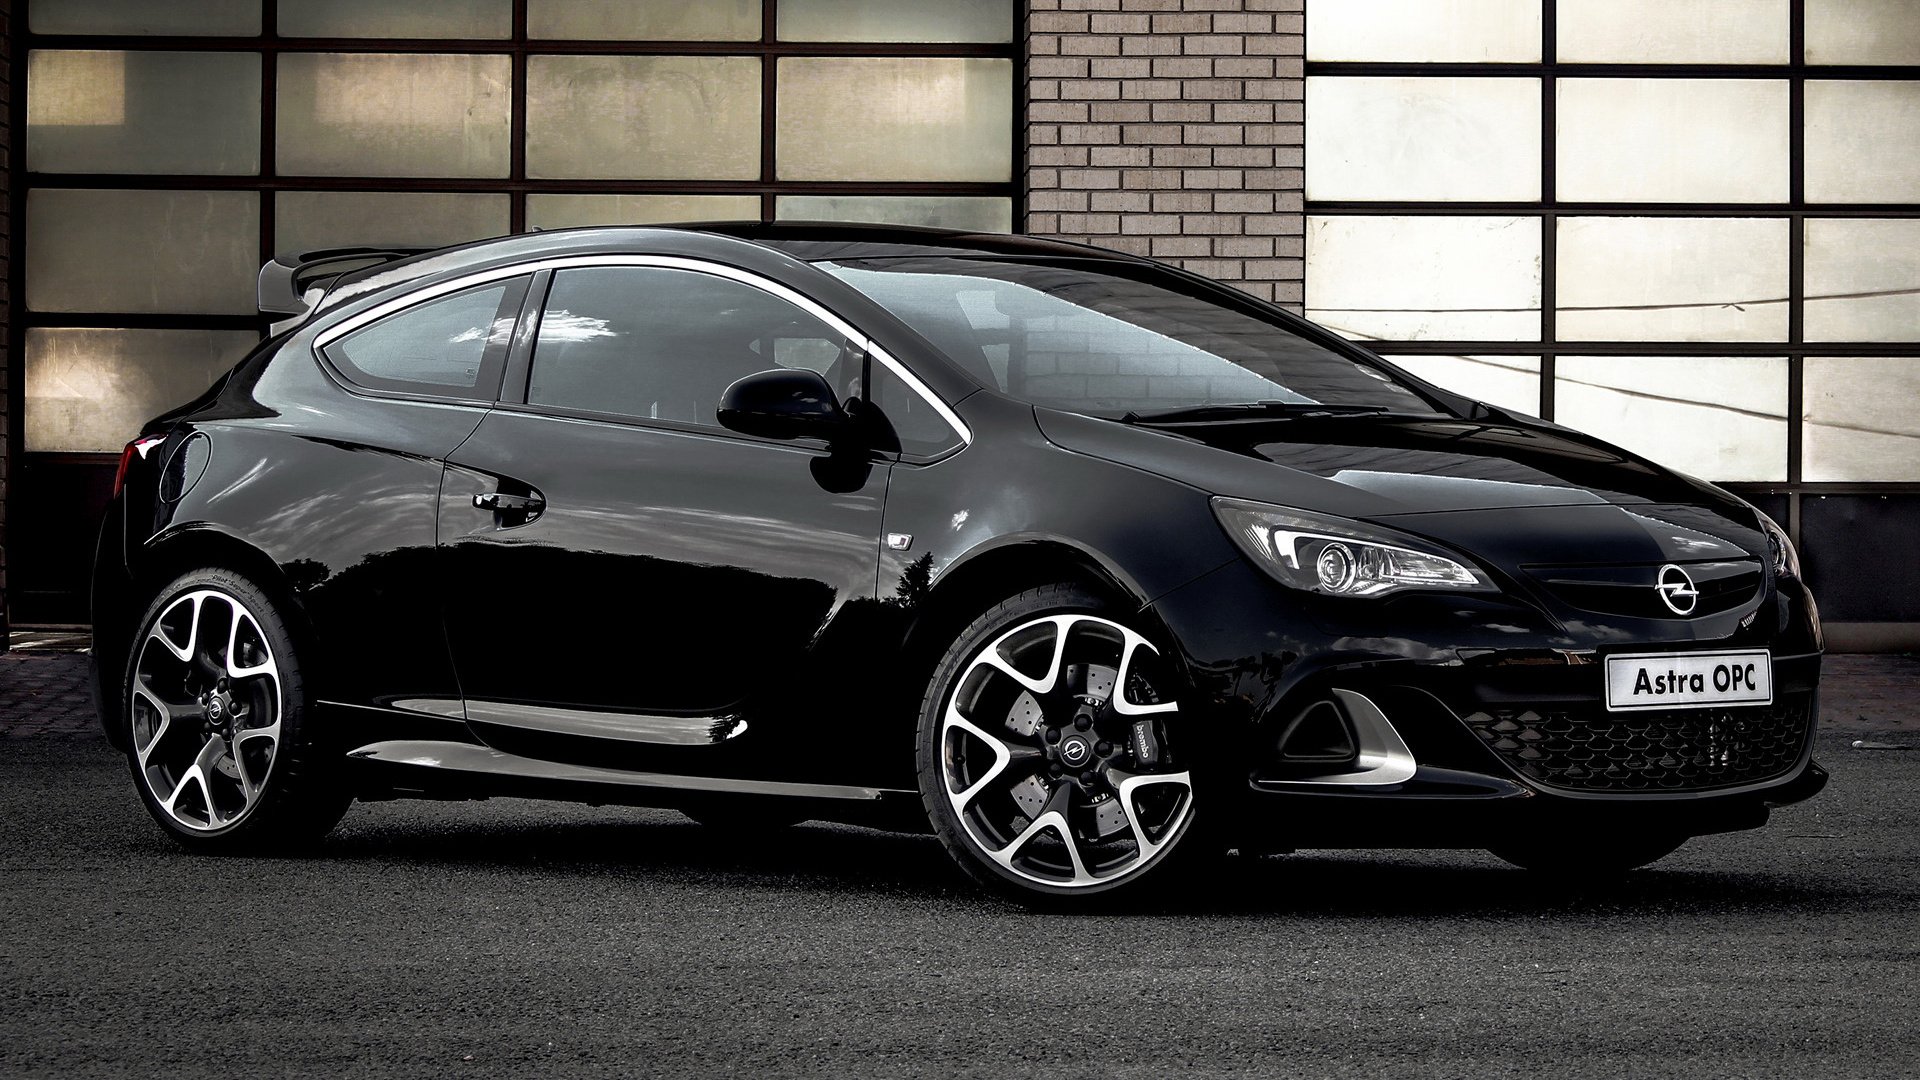 Opel Astra GTC черный. Opel Astra OPC черная. Opel Astra j GTC черный. Опель хэтчбек тюнинг